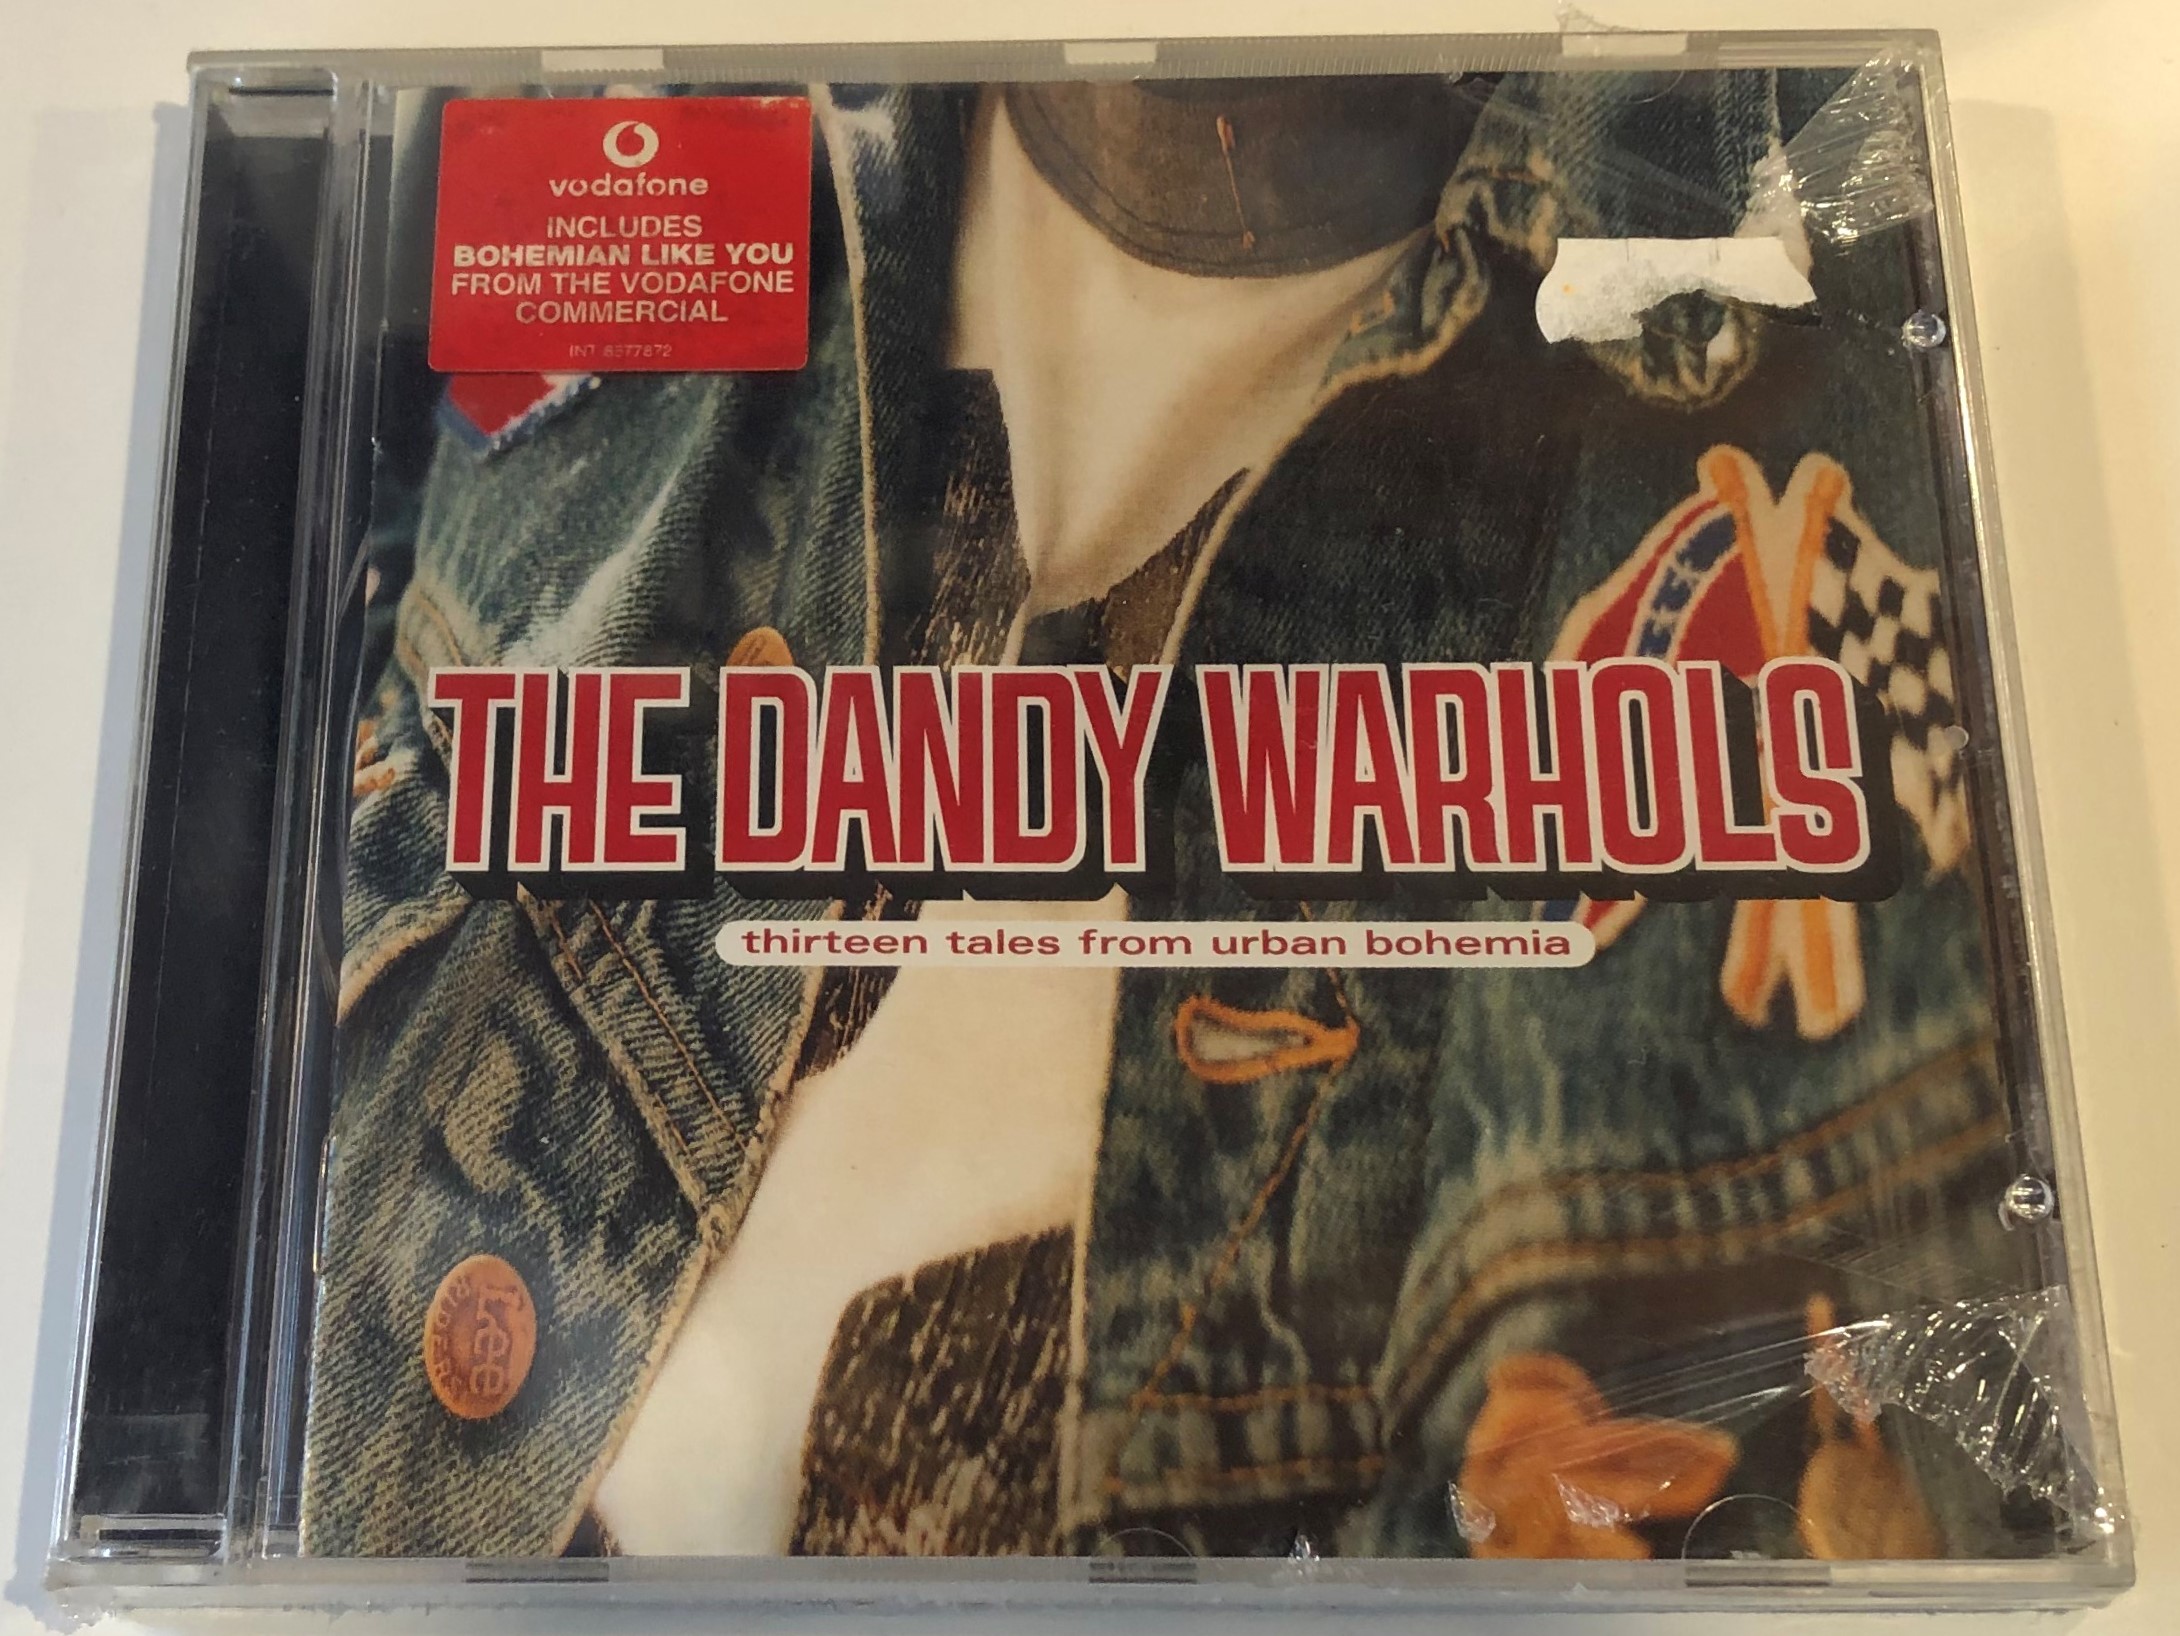 the-dandy-warhols-thirteen-tales-from-urban-bohemia-capitol-records-audio-cd-2000-72438-57787-28-1-.jpg